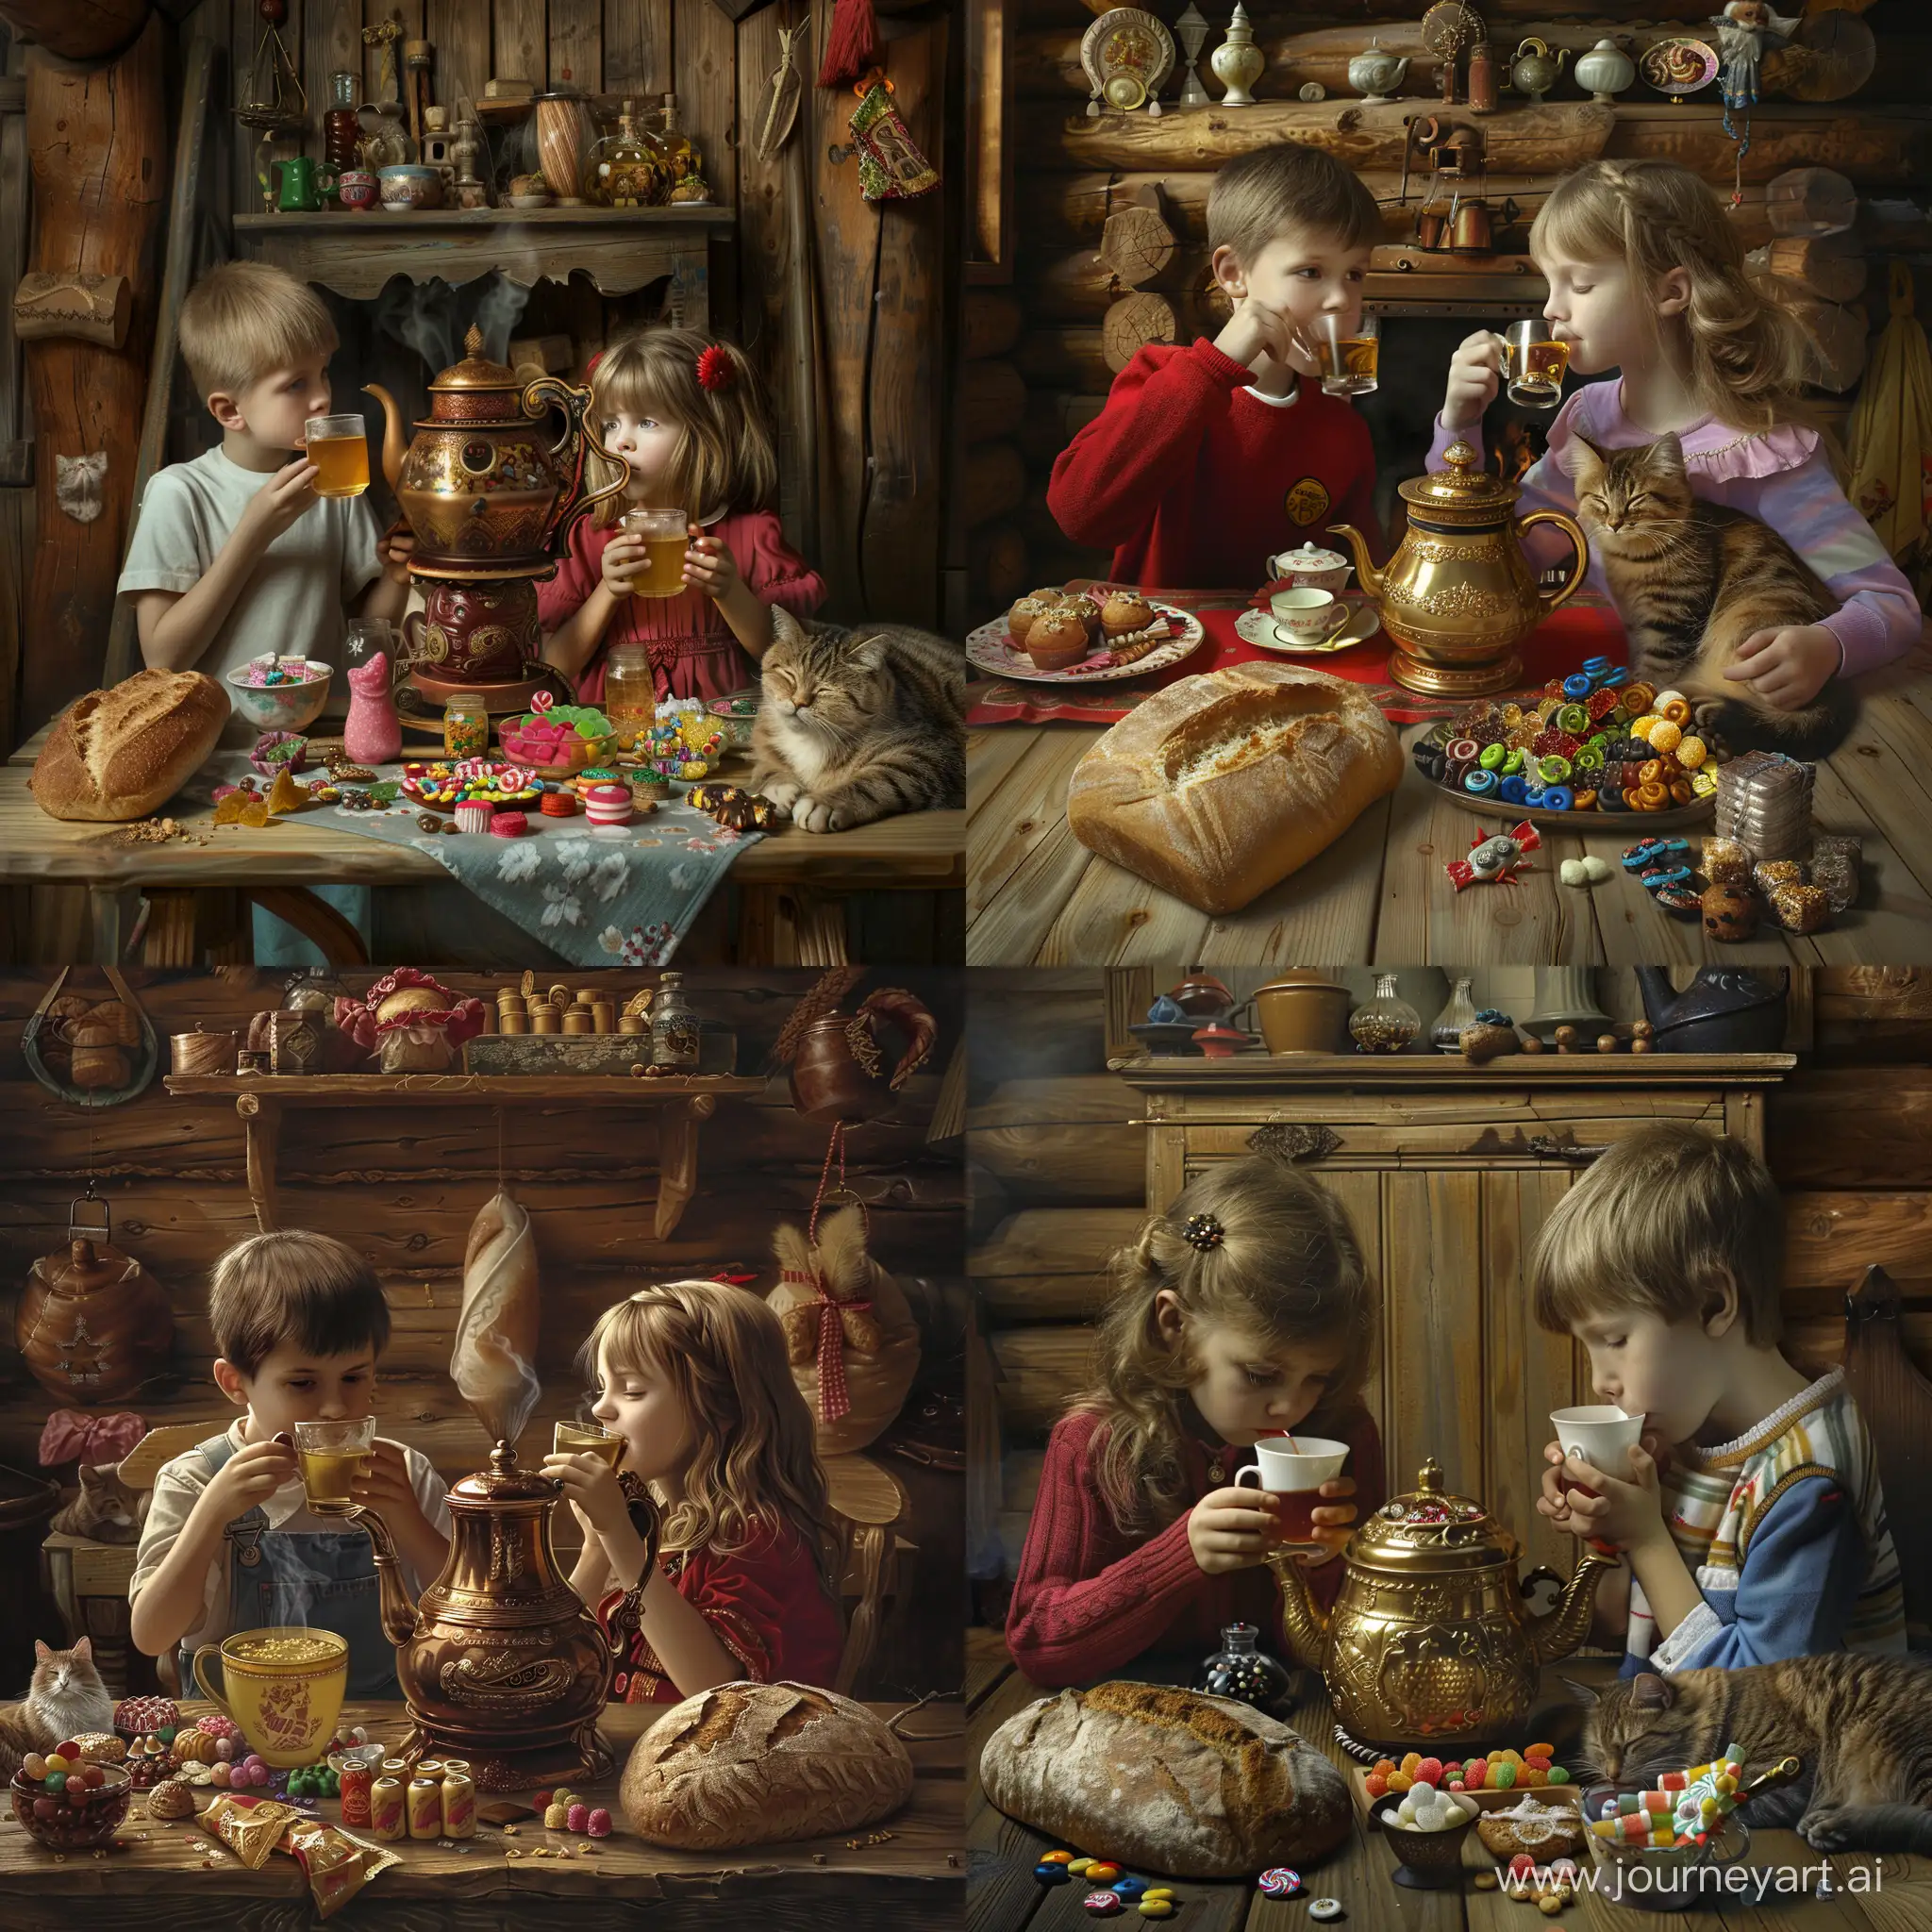 Children-Enjoying-Tea-Time-with-Samovar-in-a-Cozy-Russian-Village-Hut